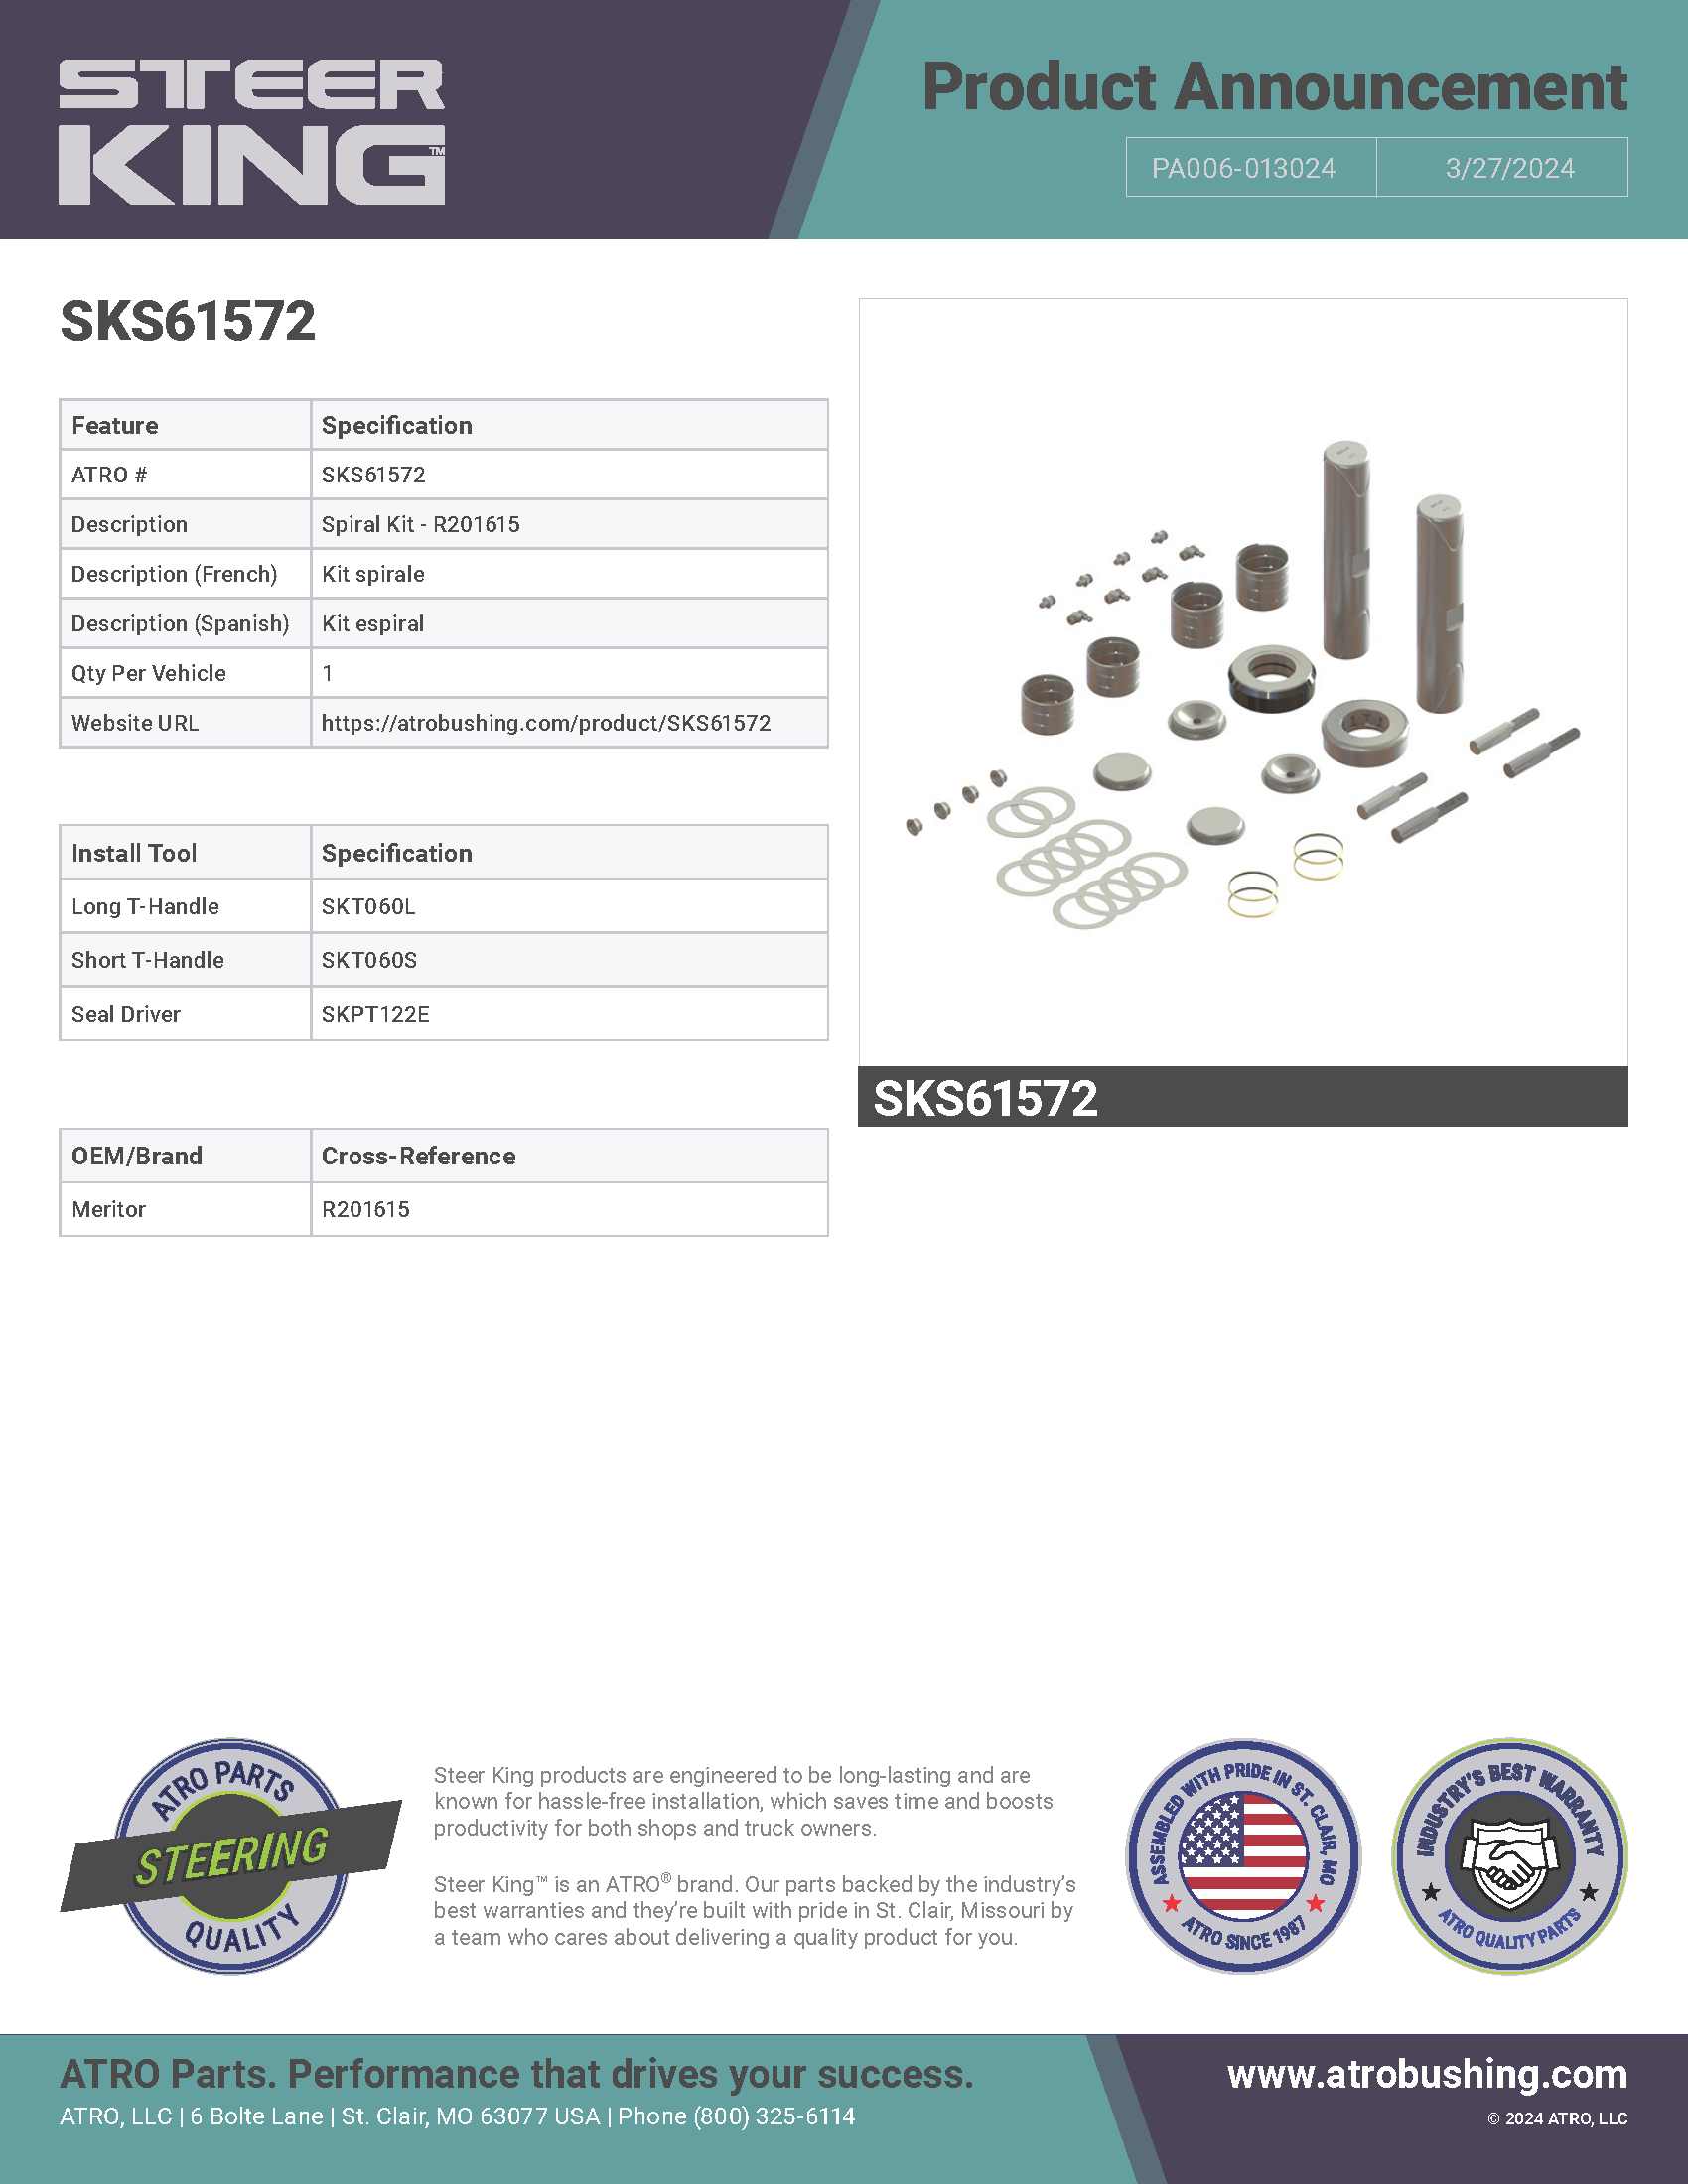 SKS61572 Spiral Kit - R201615 PA006-013024